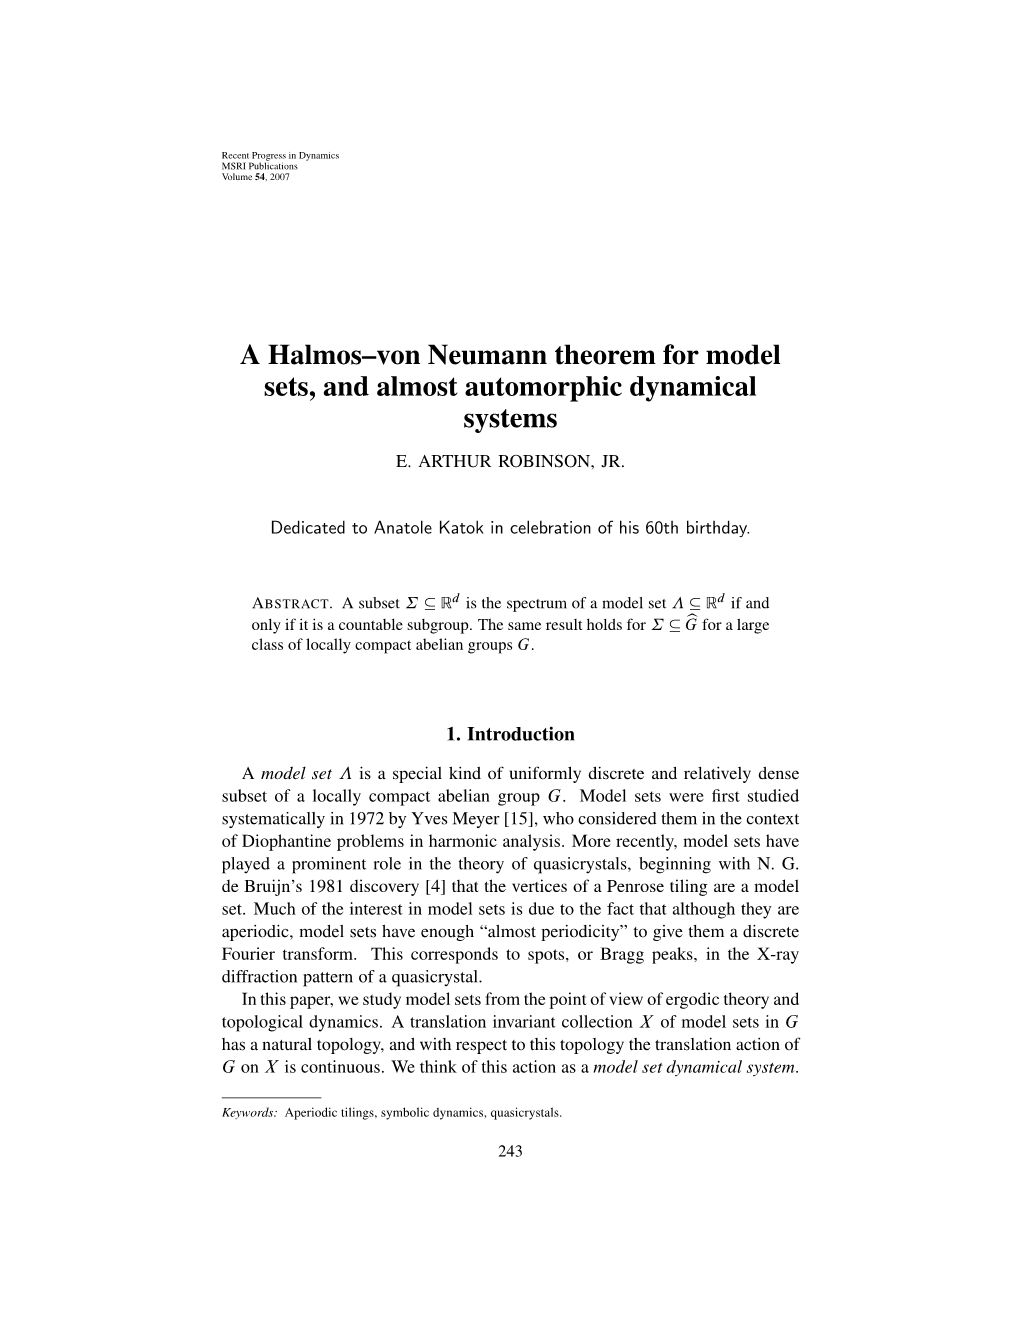 A Halmos-Von Neumann Theorem for Model Set Dynamical Systems